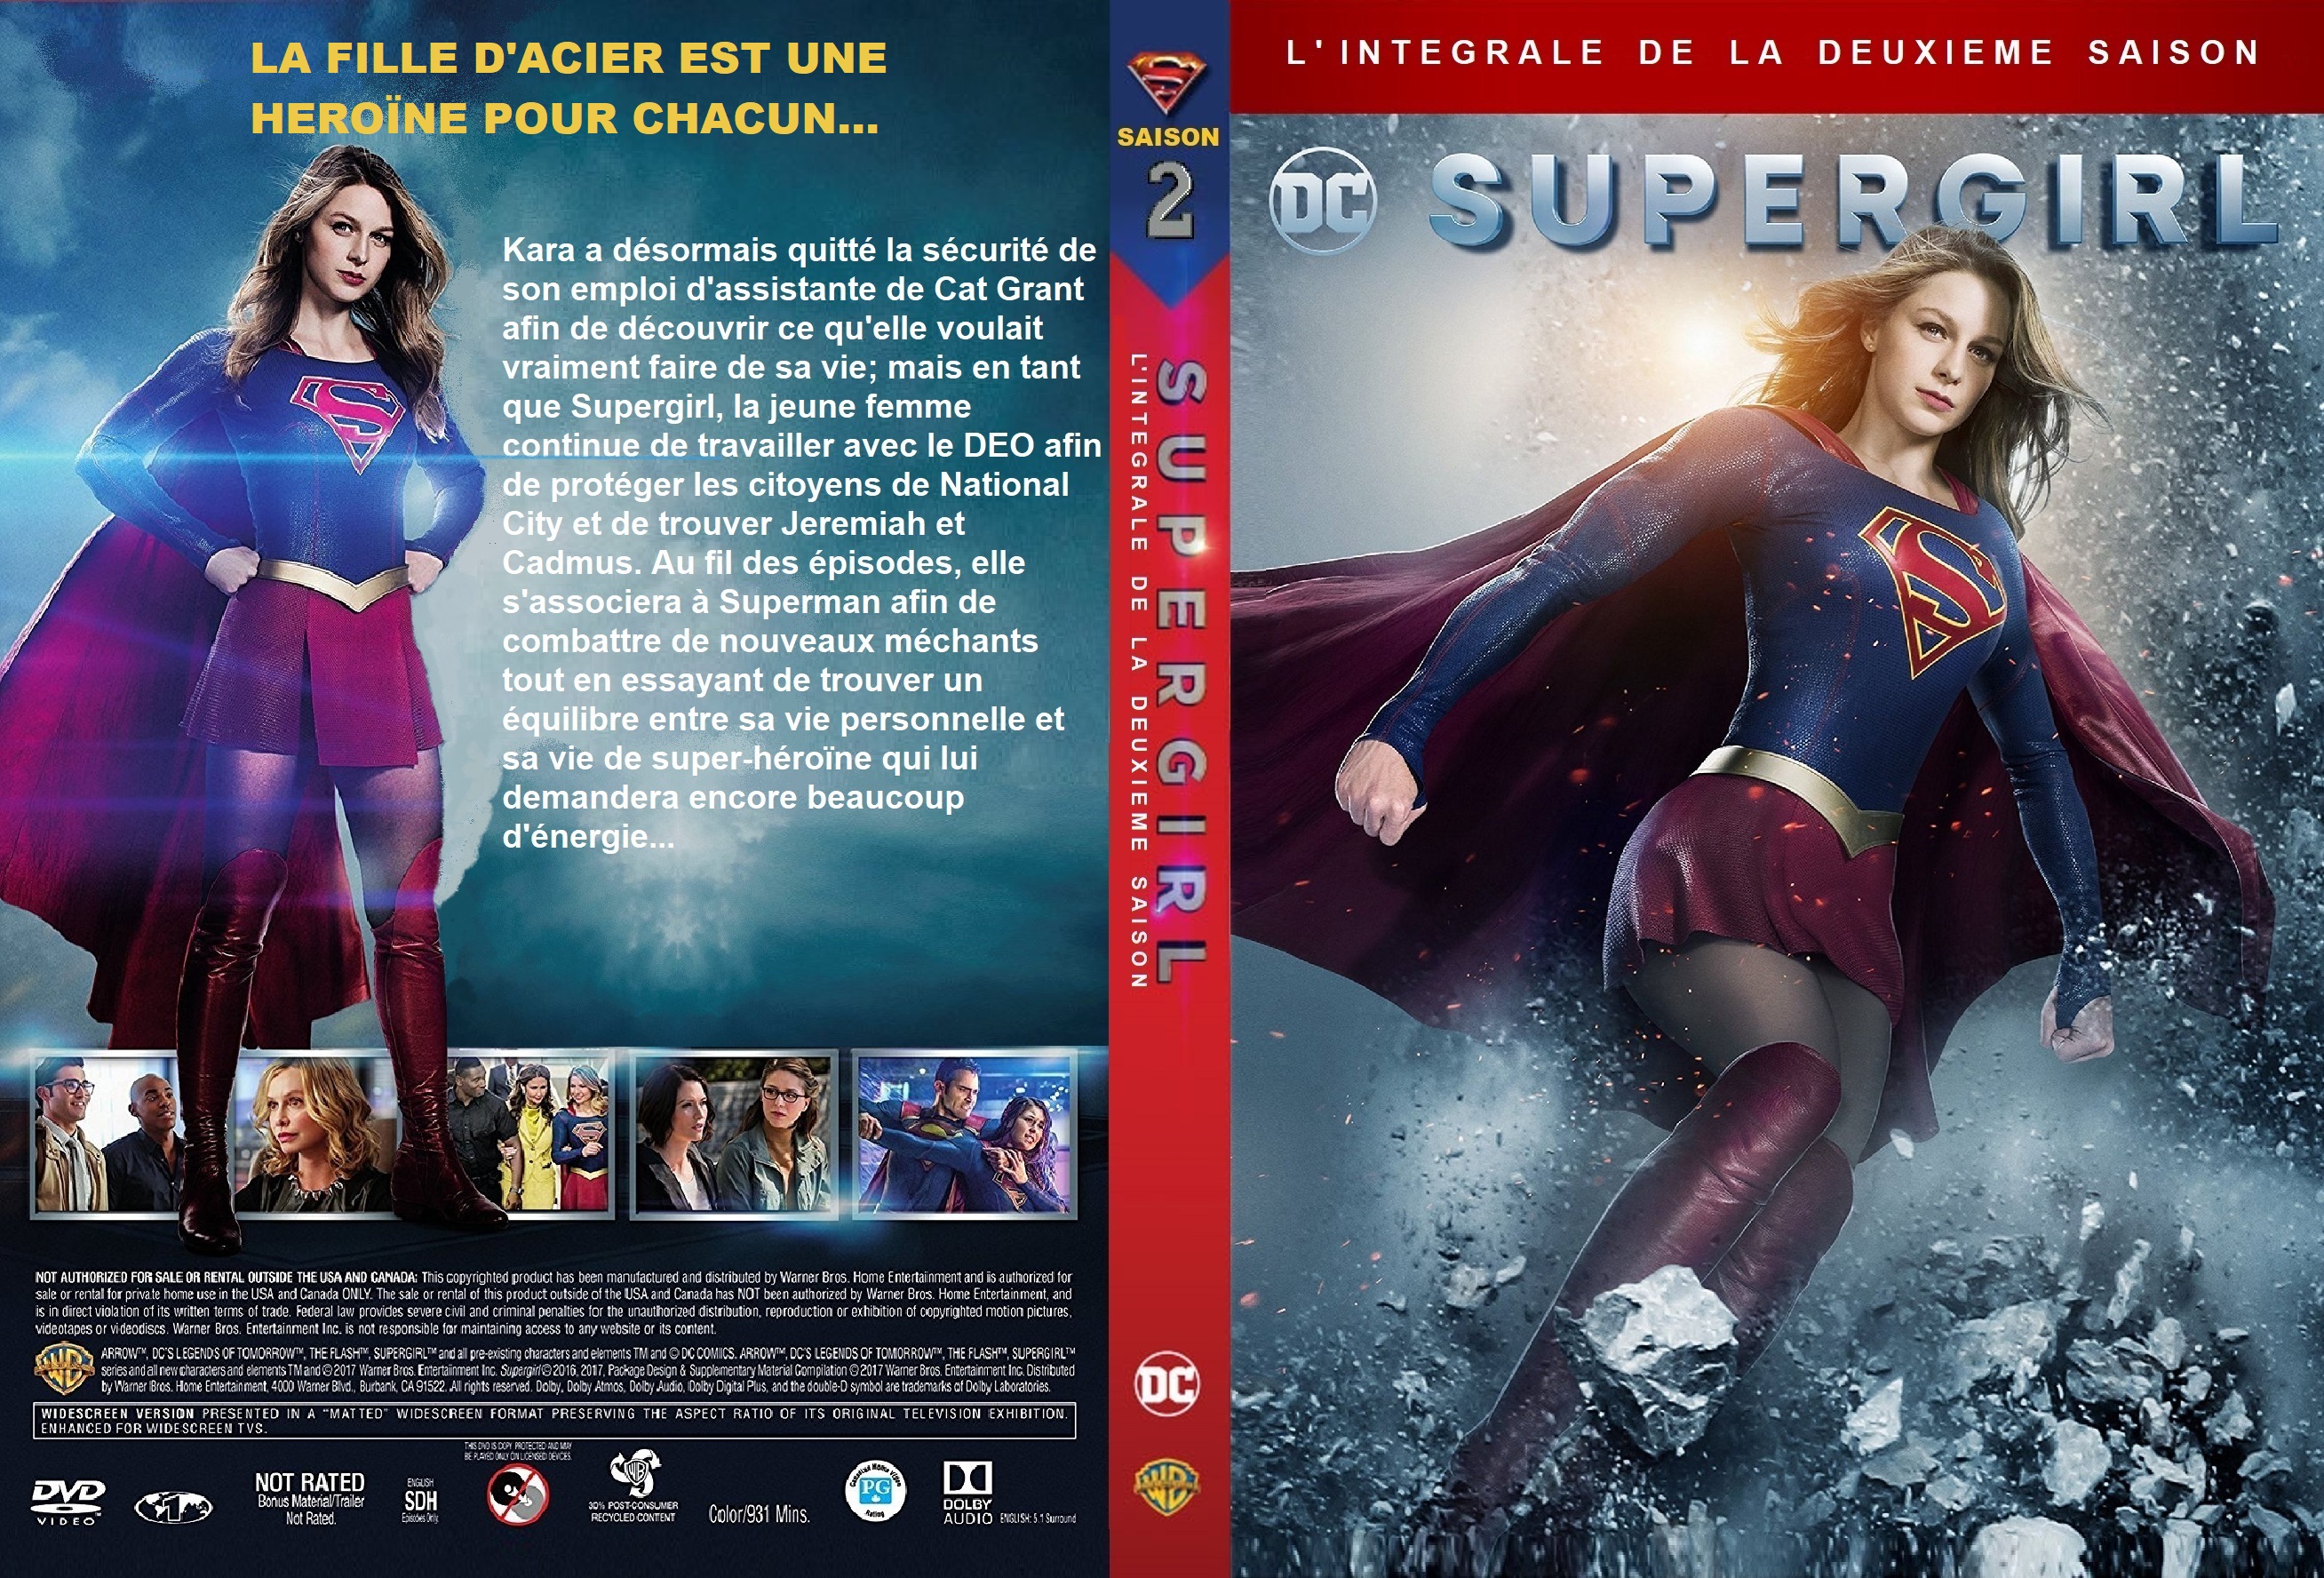 Jaquette DVD Supergirl saison 2 custom